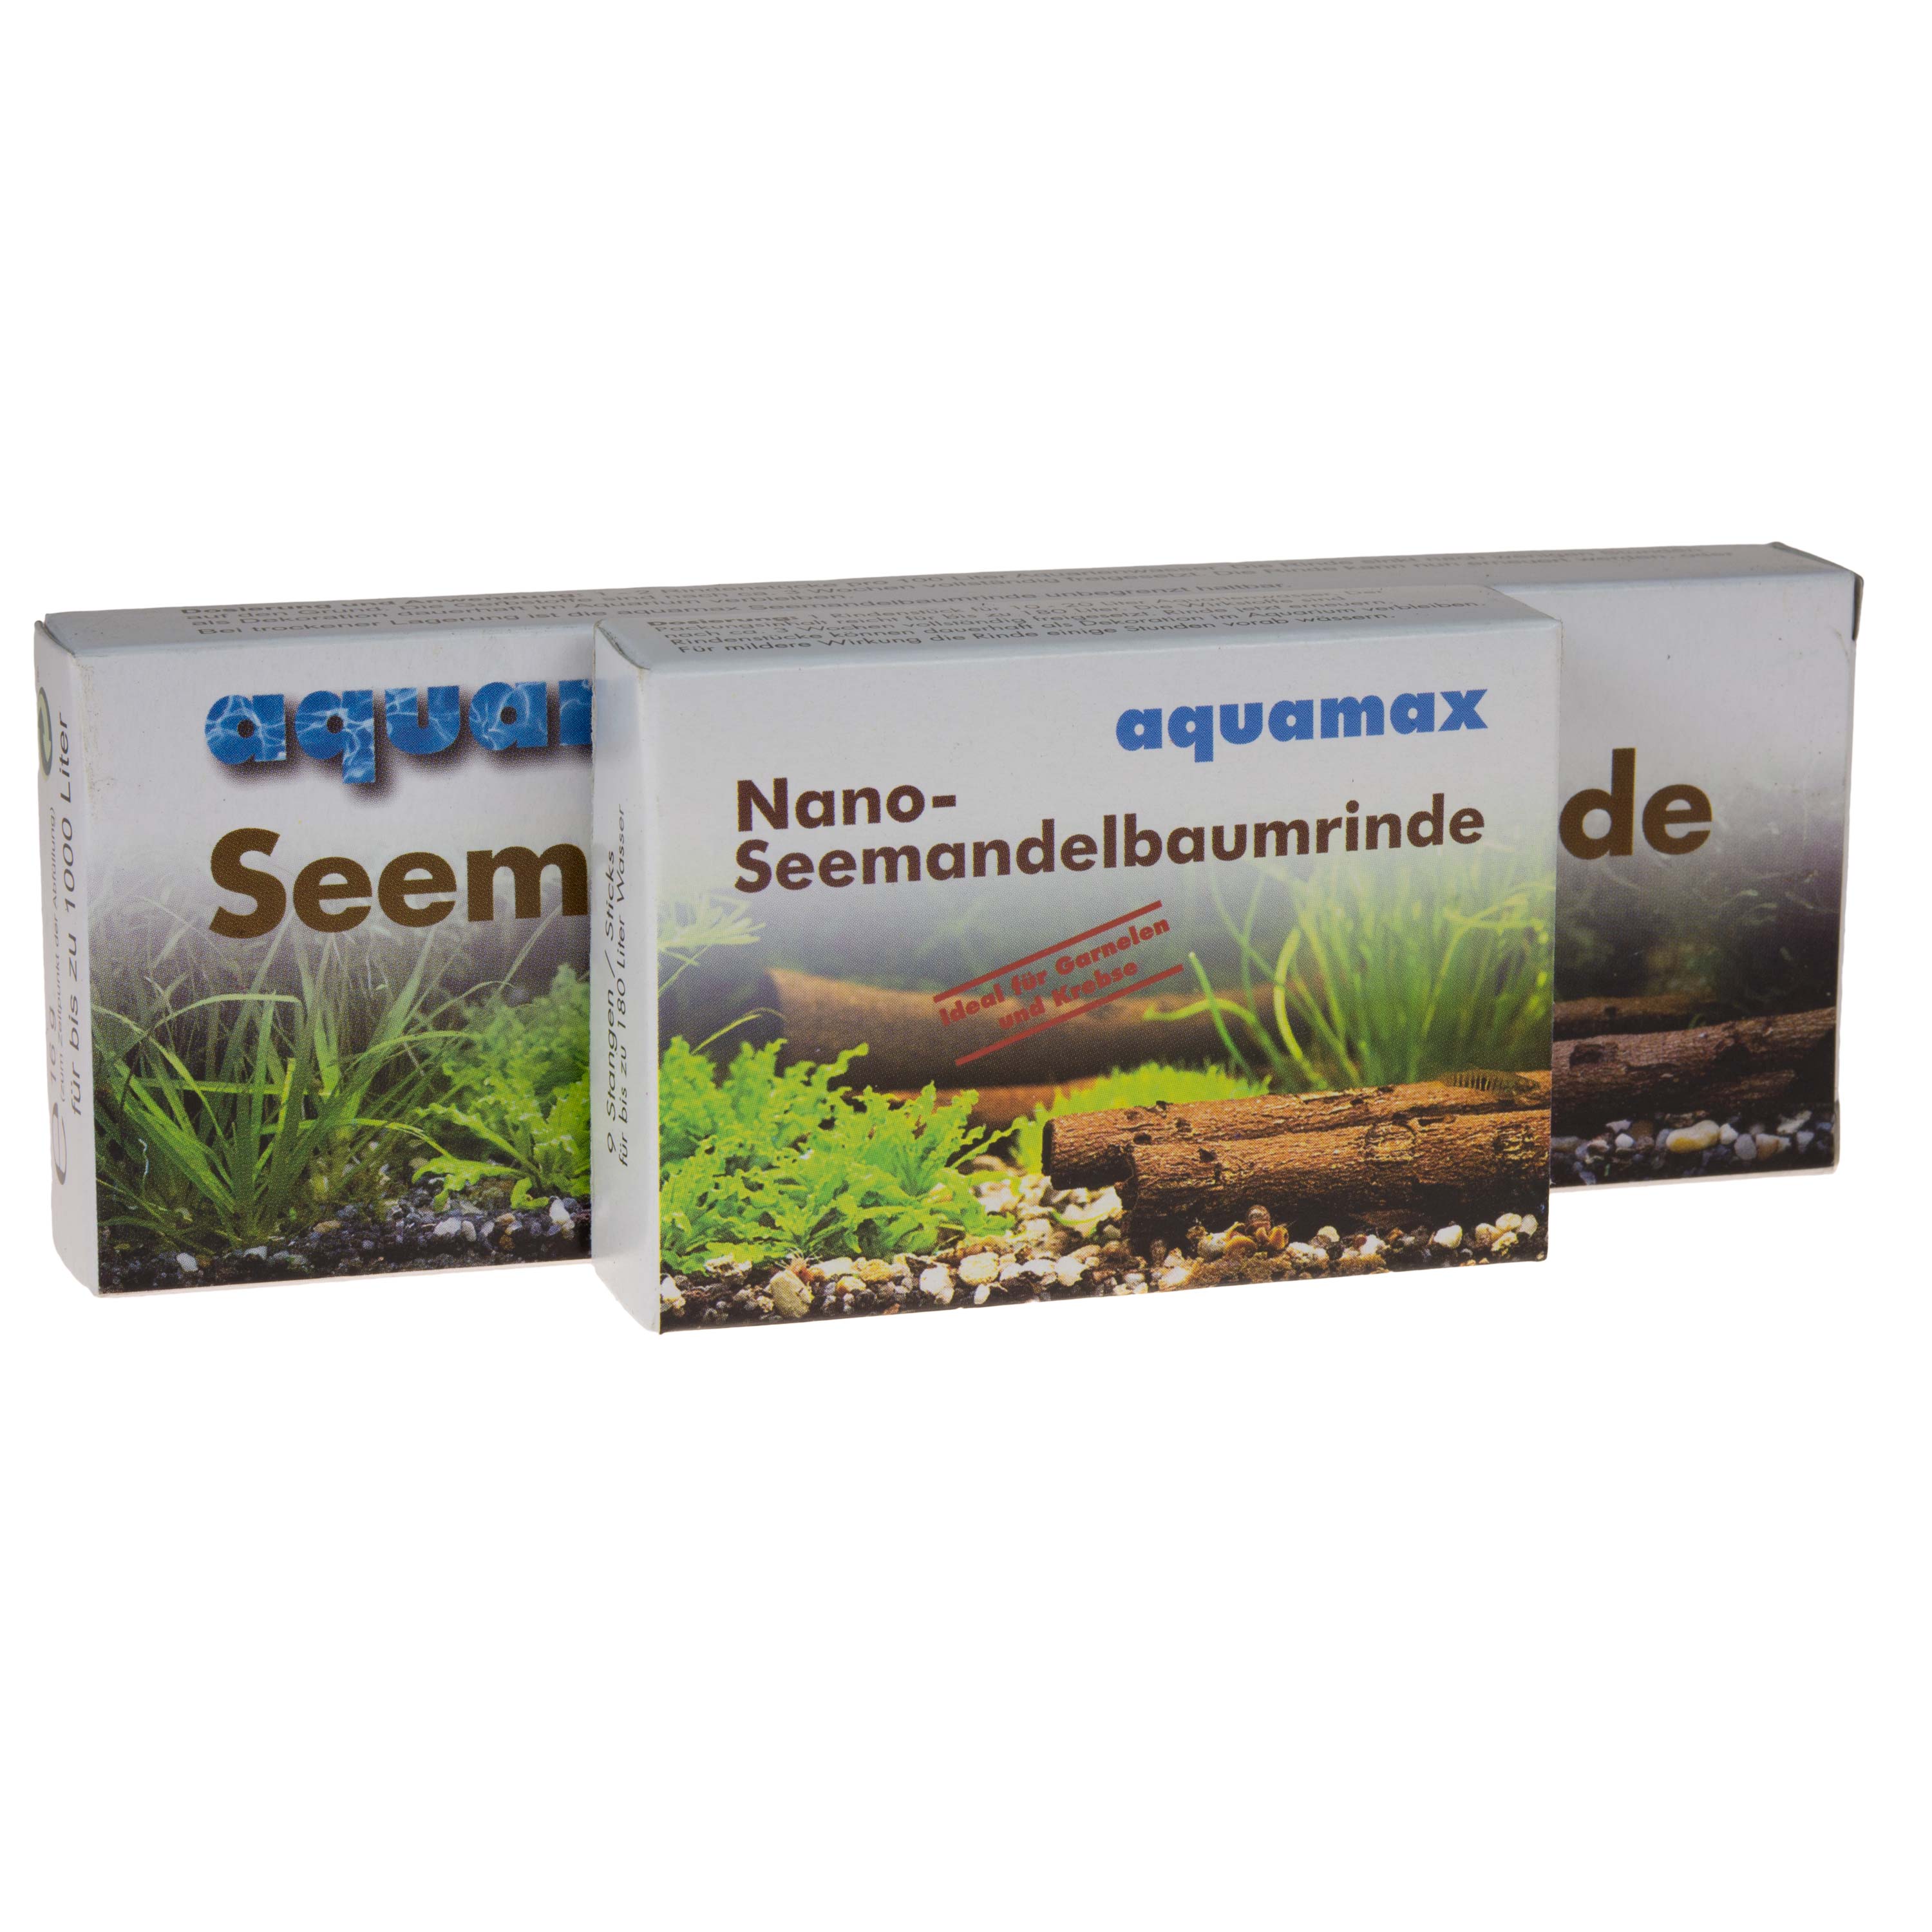 Seemandelbaumrinde aquamax